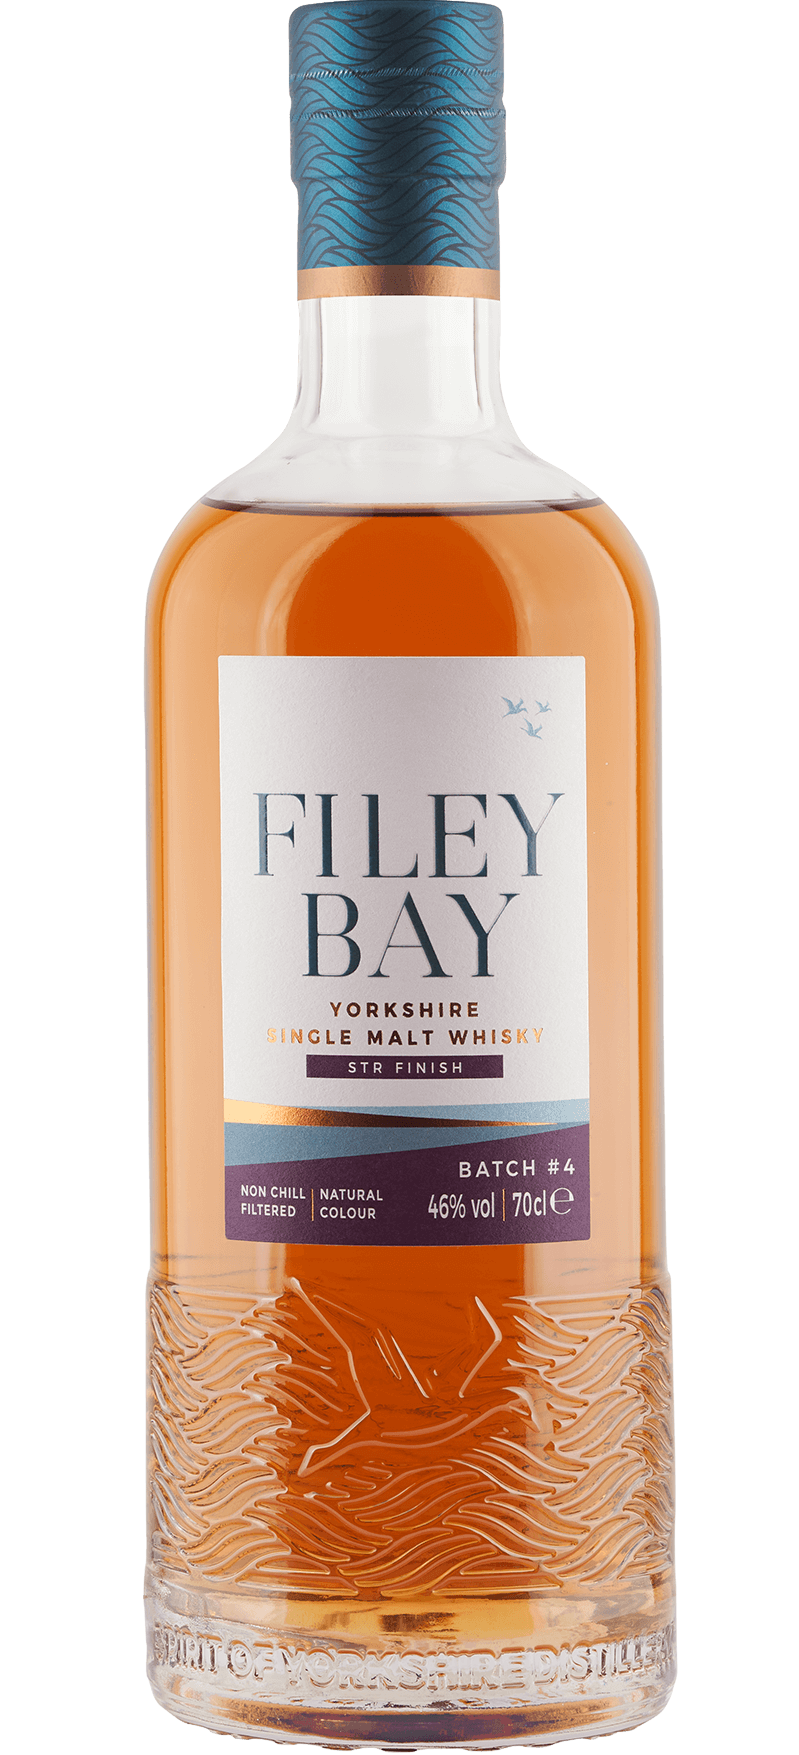 Filey Bay STR FInish Batch #4 from the Spirit of Yorkshire Distillery